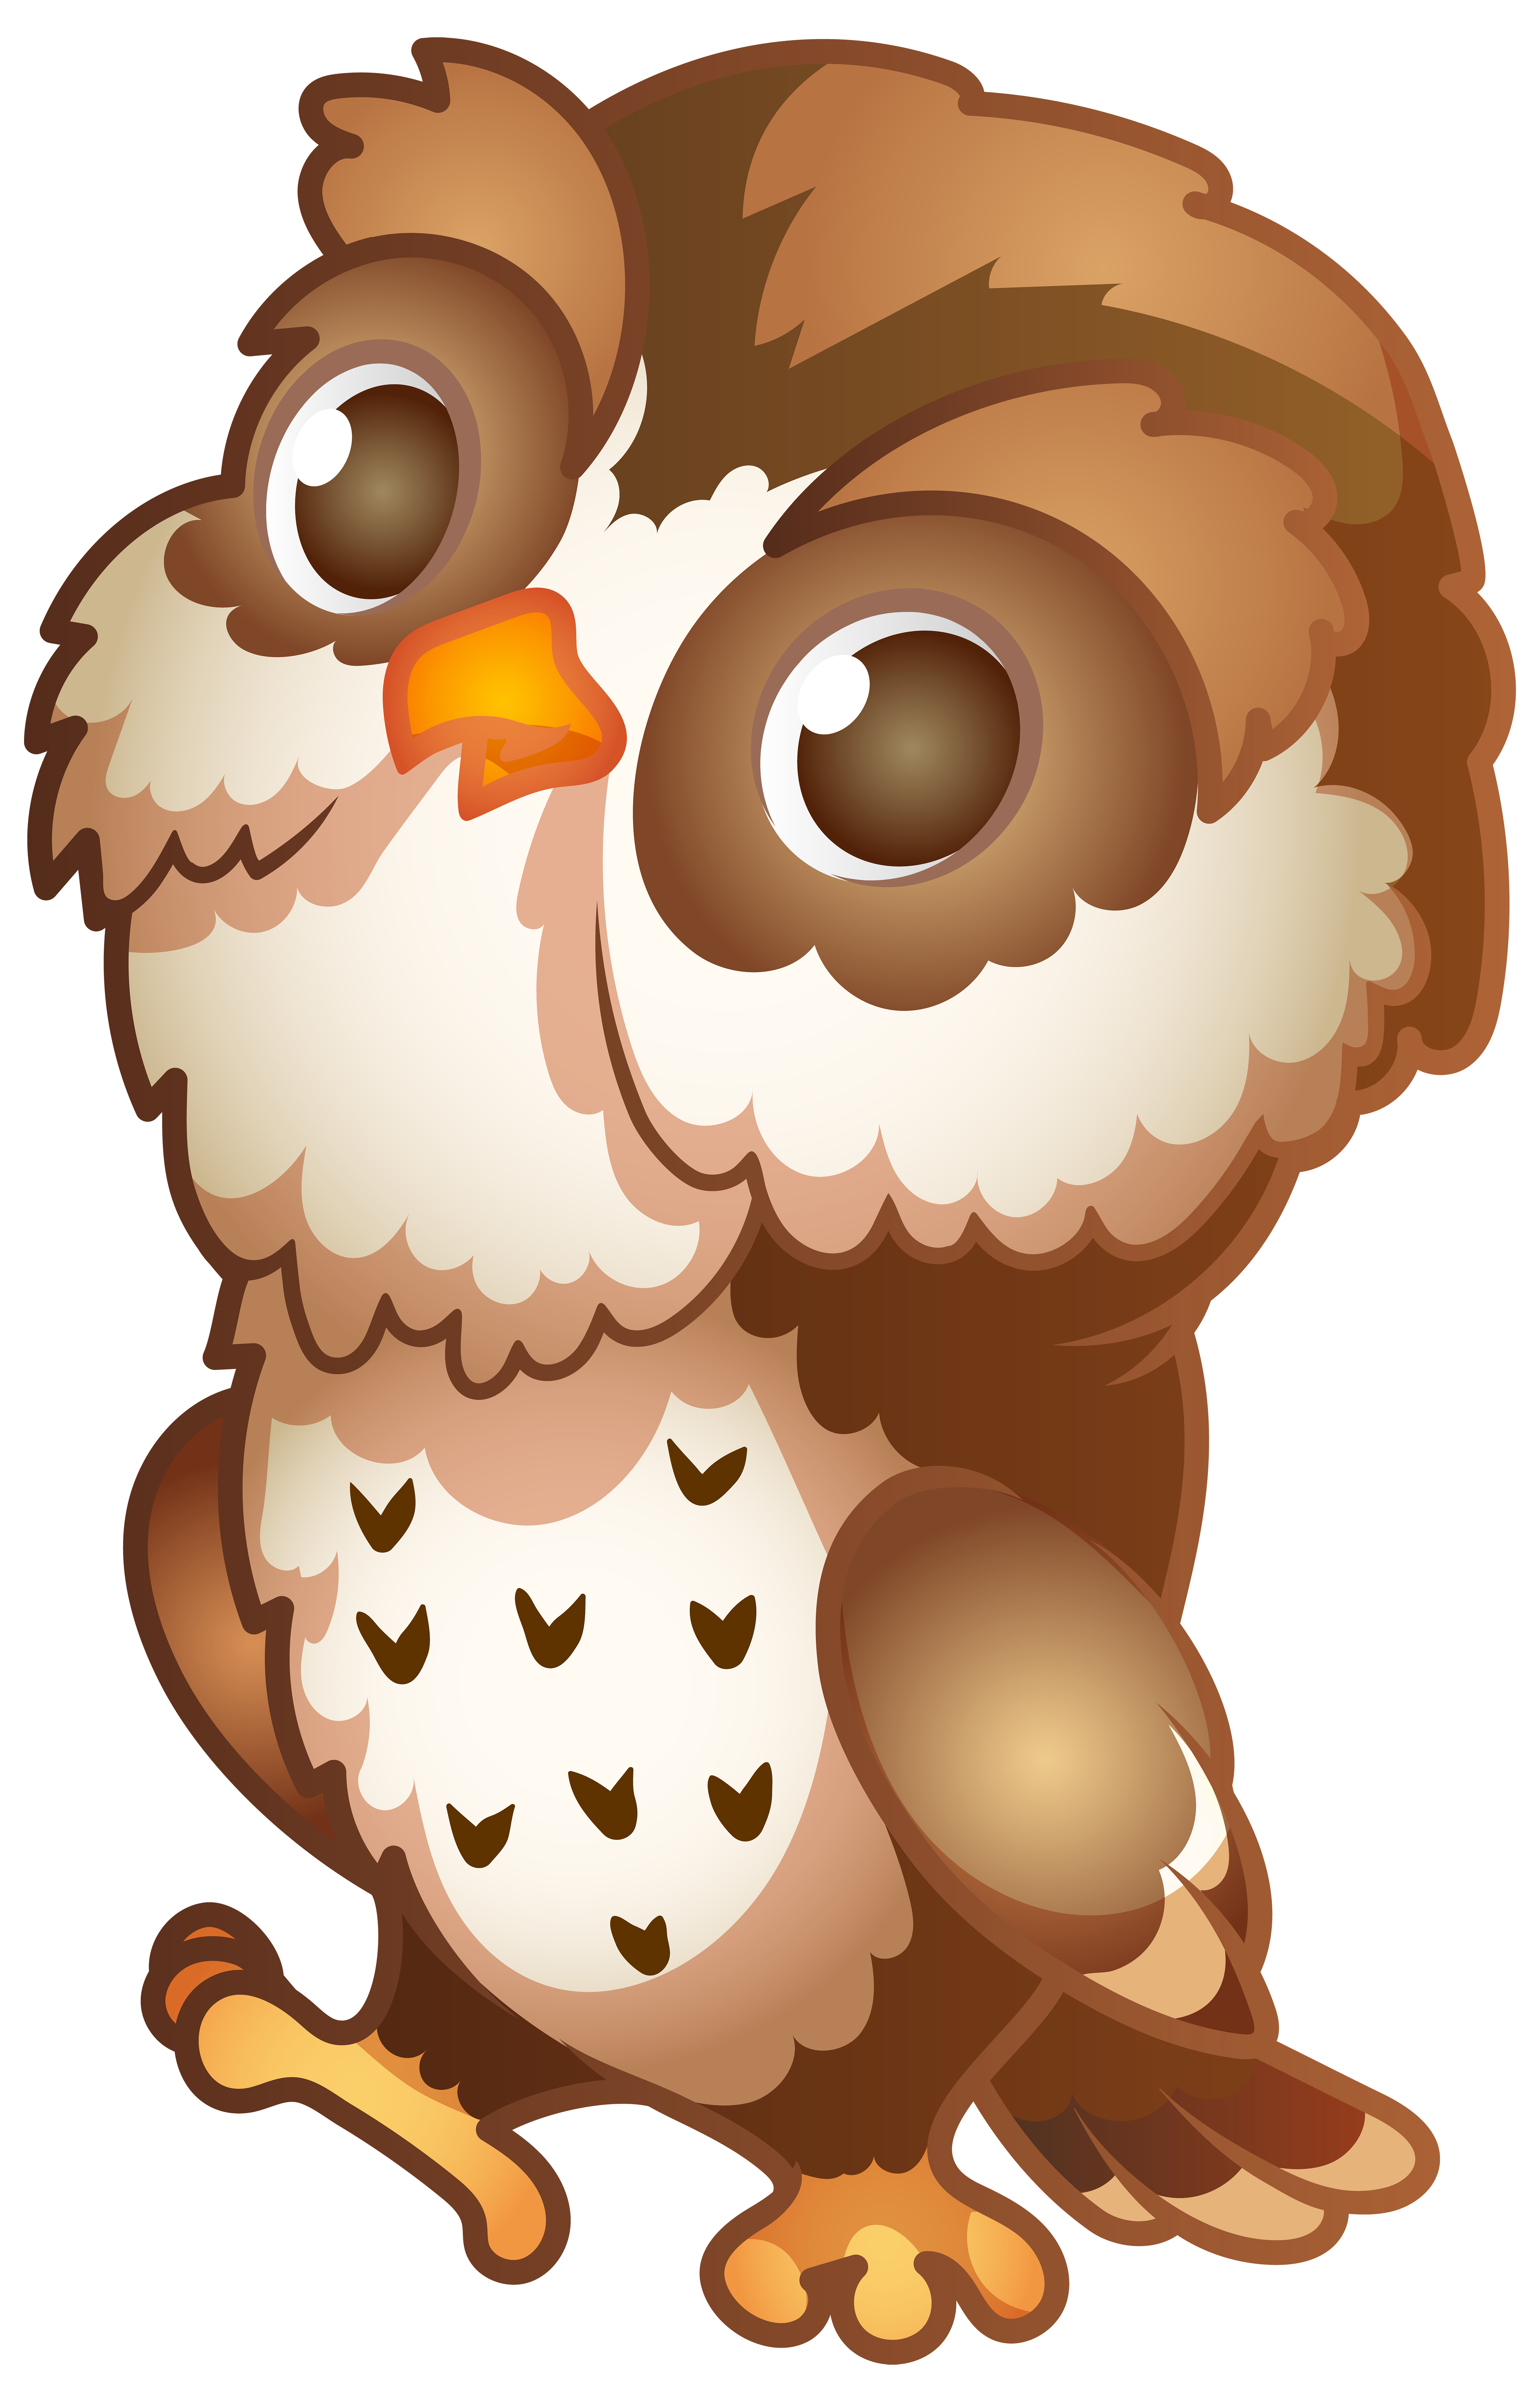 Owl Cartoon PNG Transparent Image | Gallery Yopriceville ...